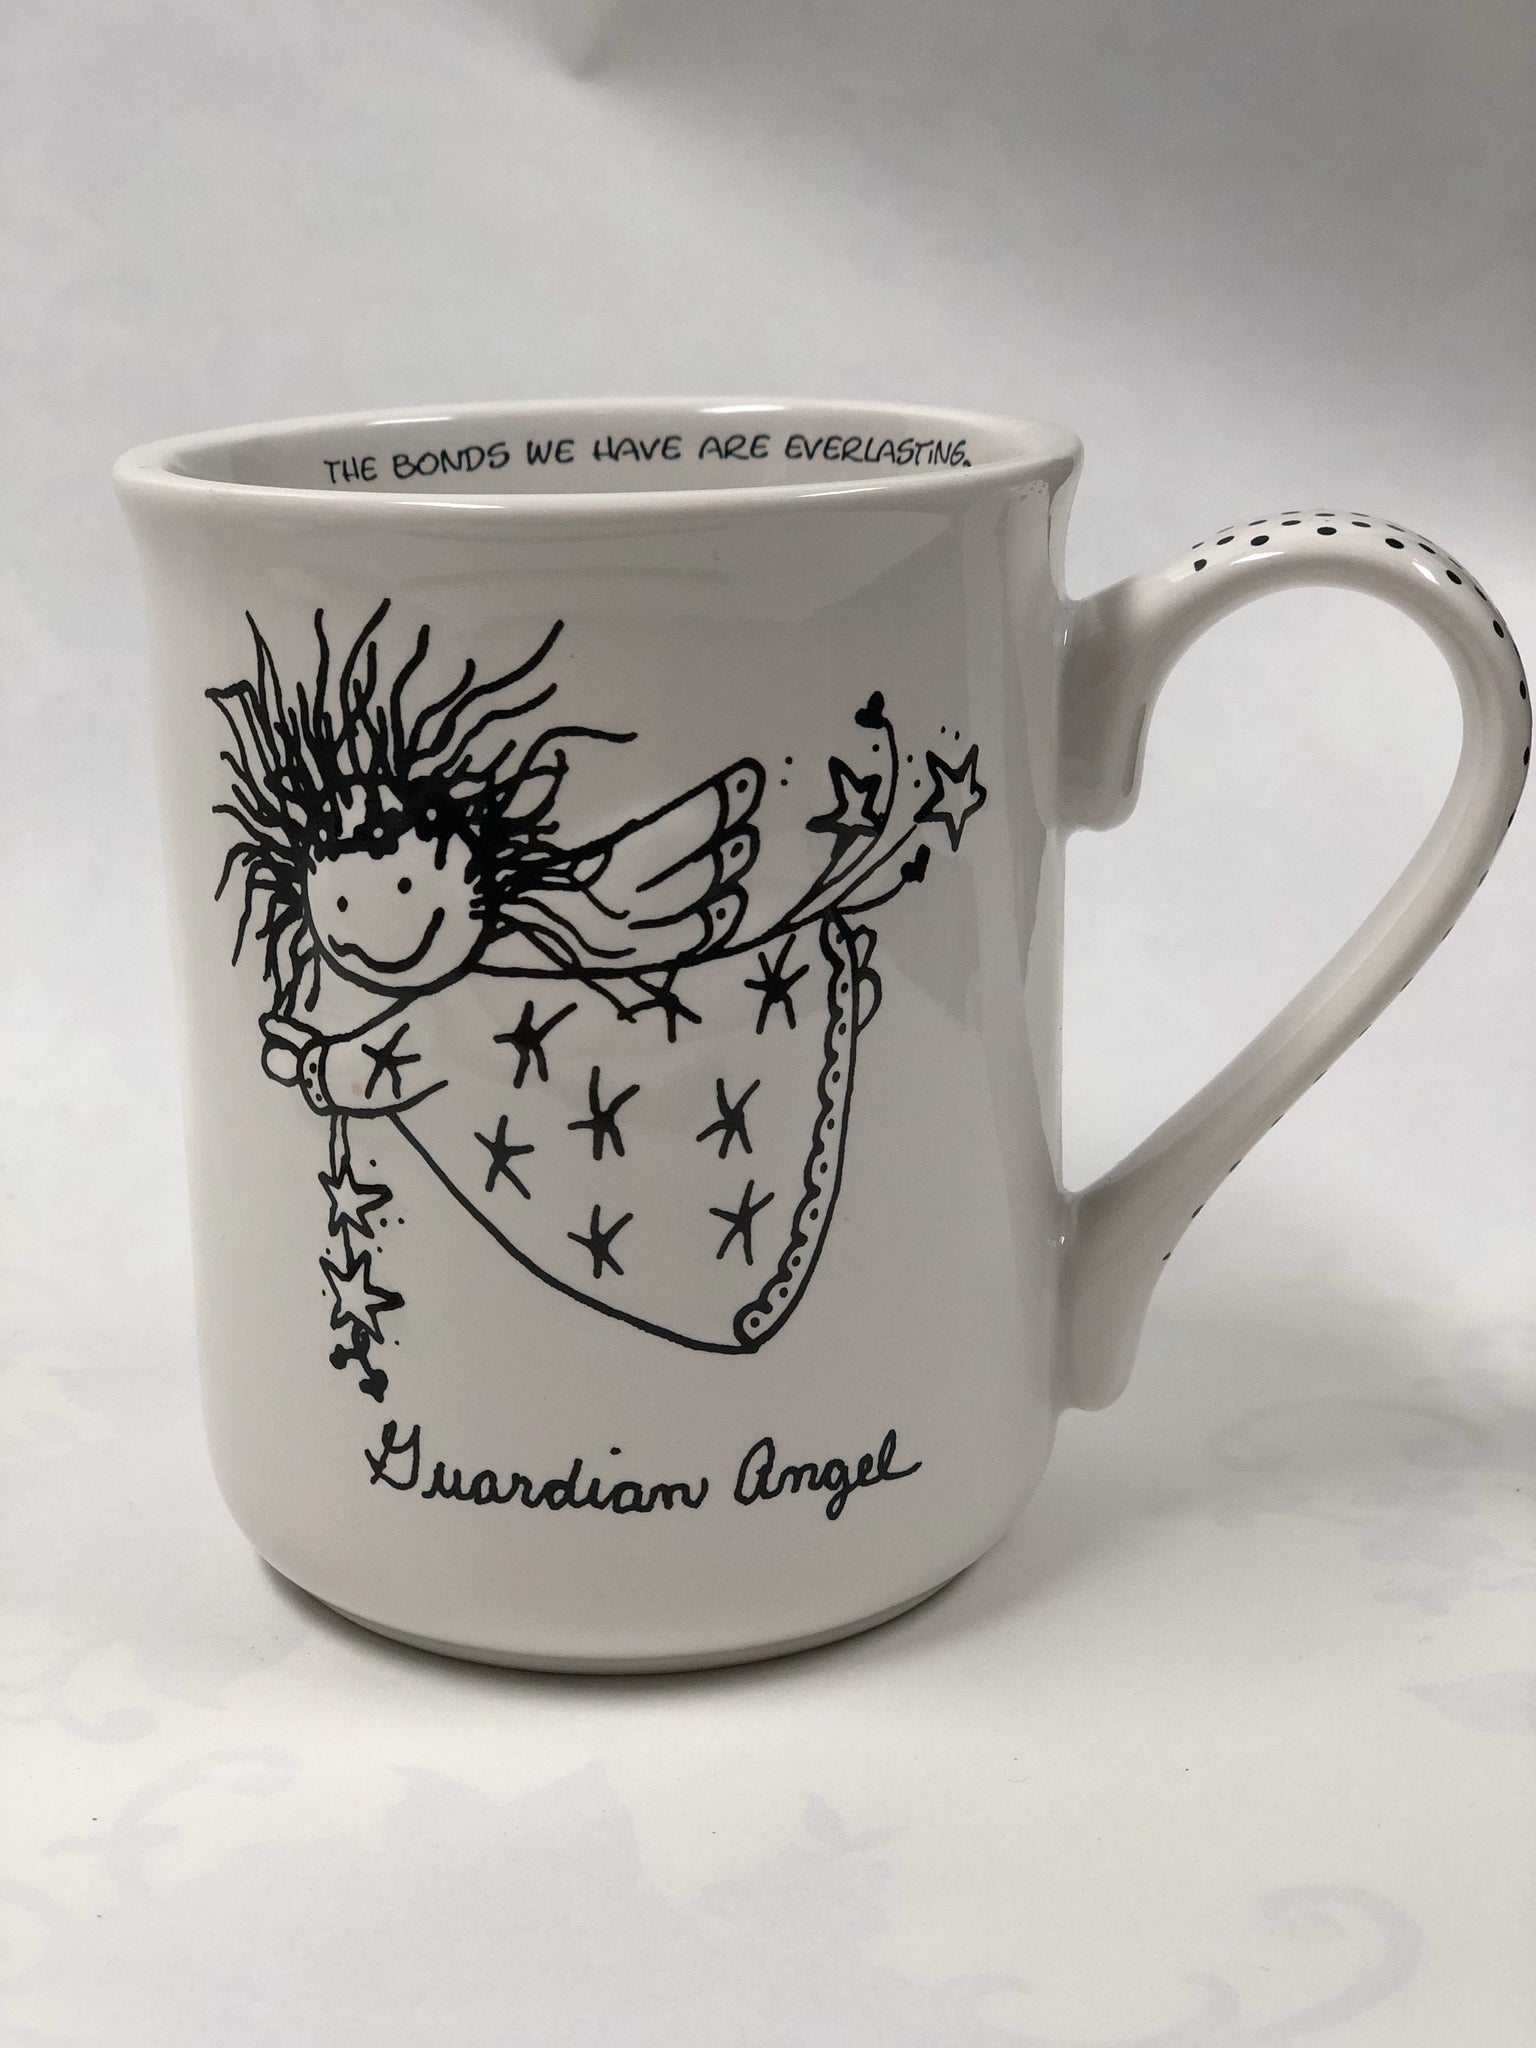 Guardian Angel mug